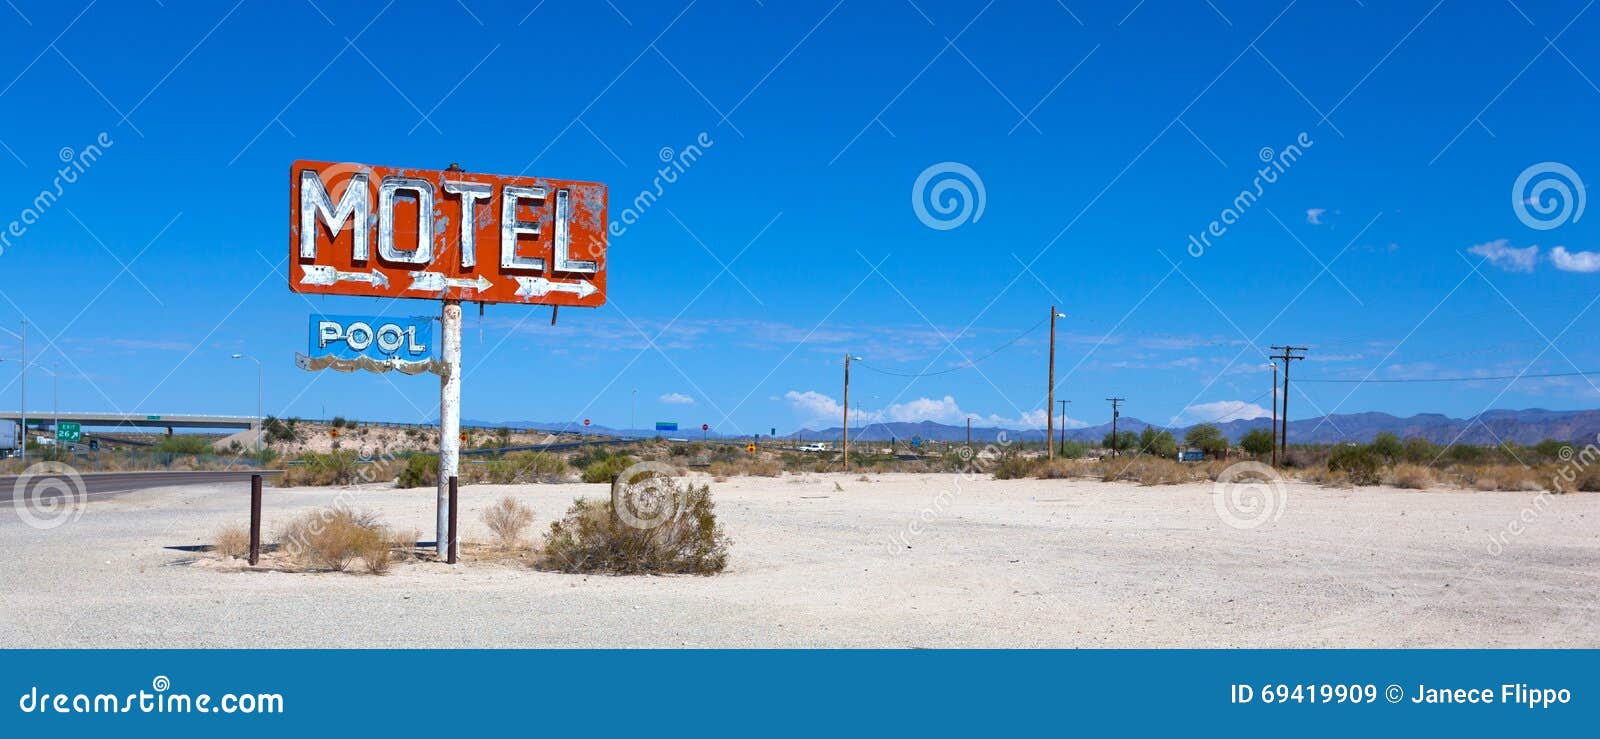 abadoned, vintage motel sign on route 66